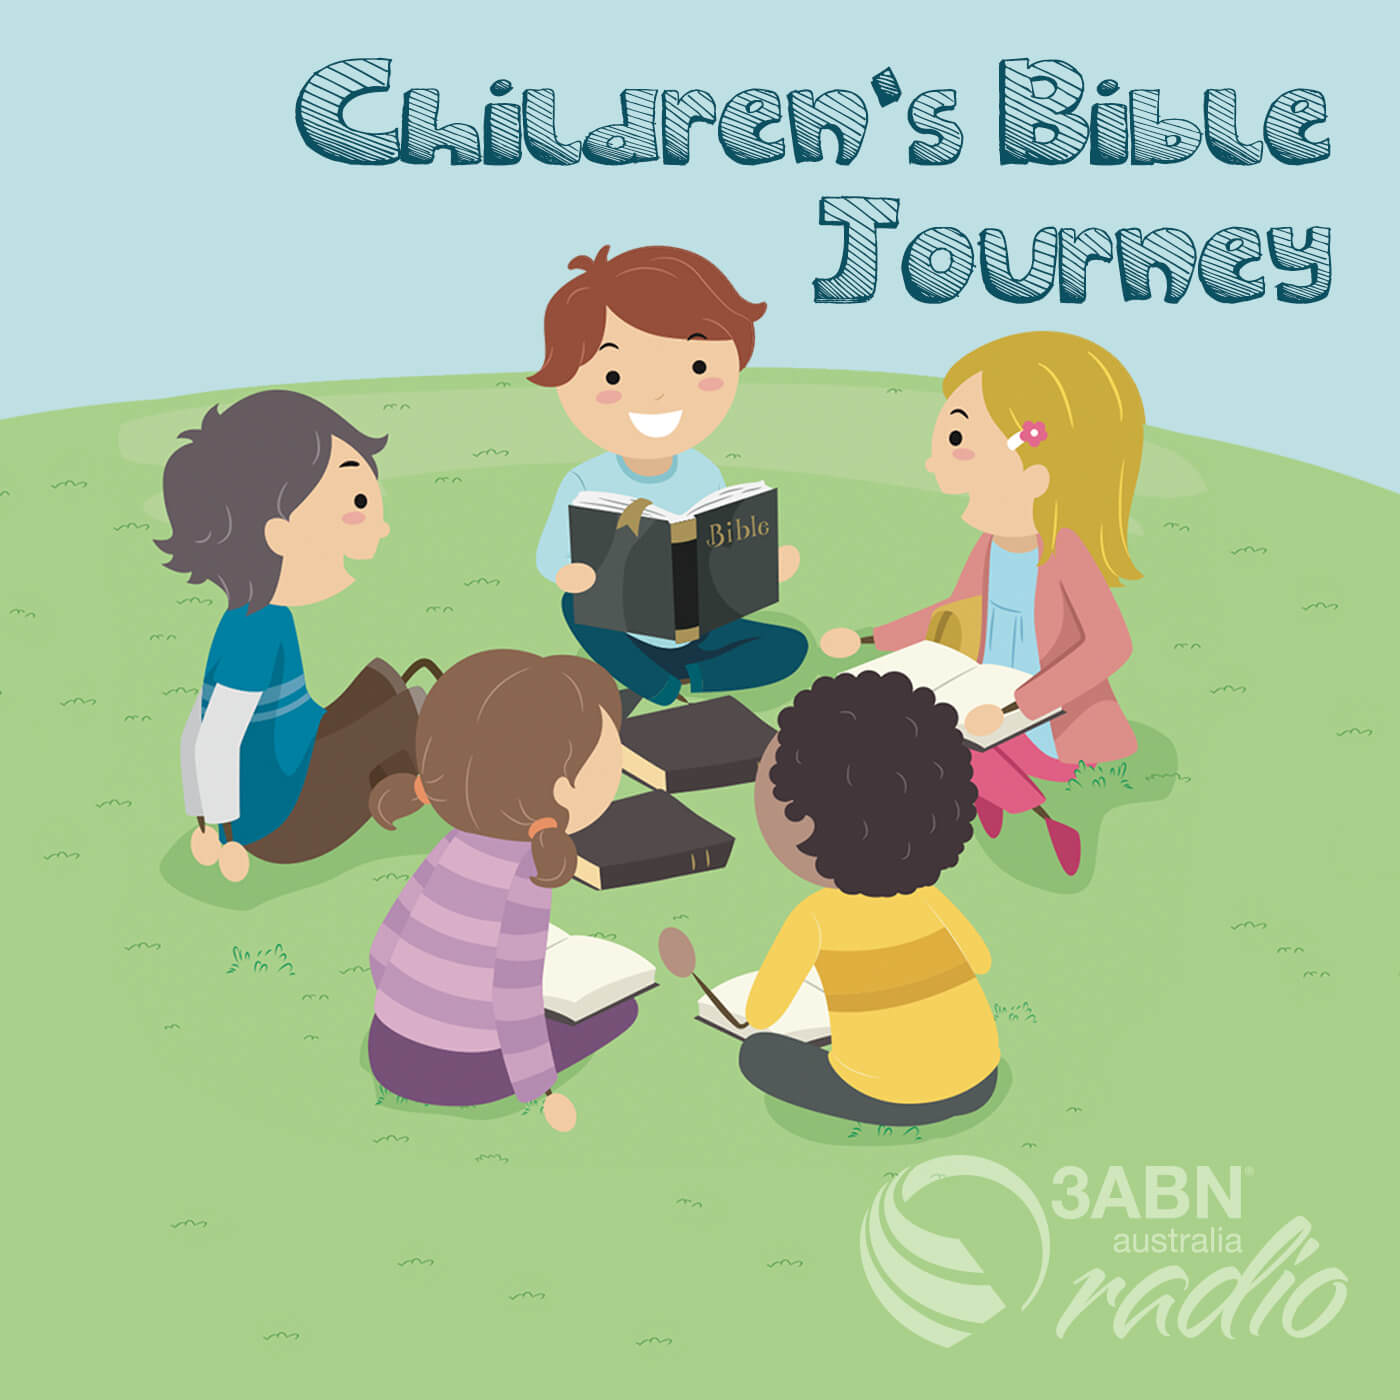 Children's Bible Journey - 2127